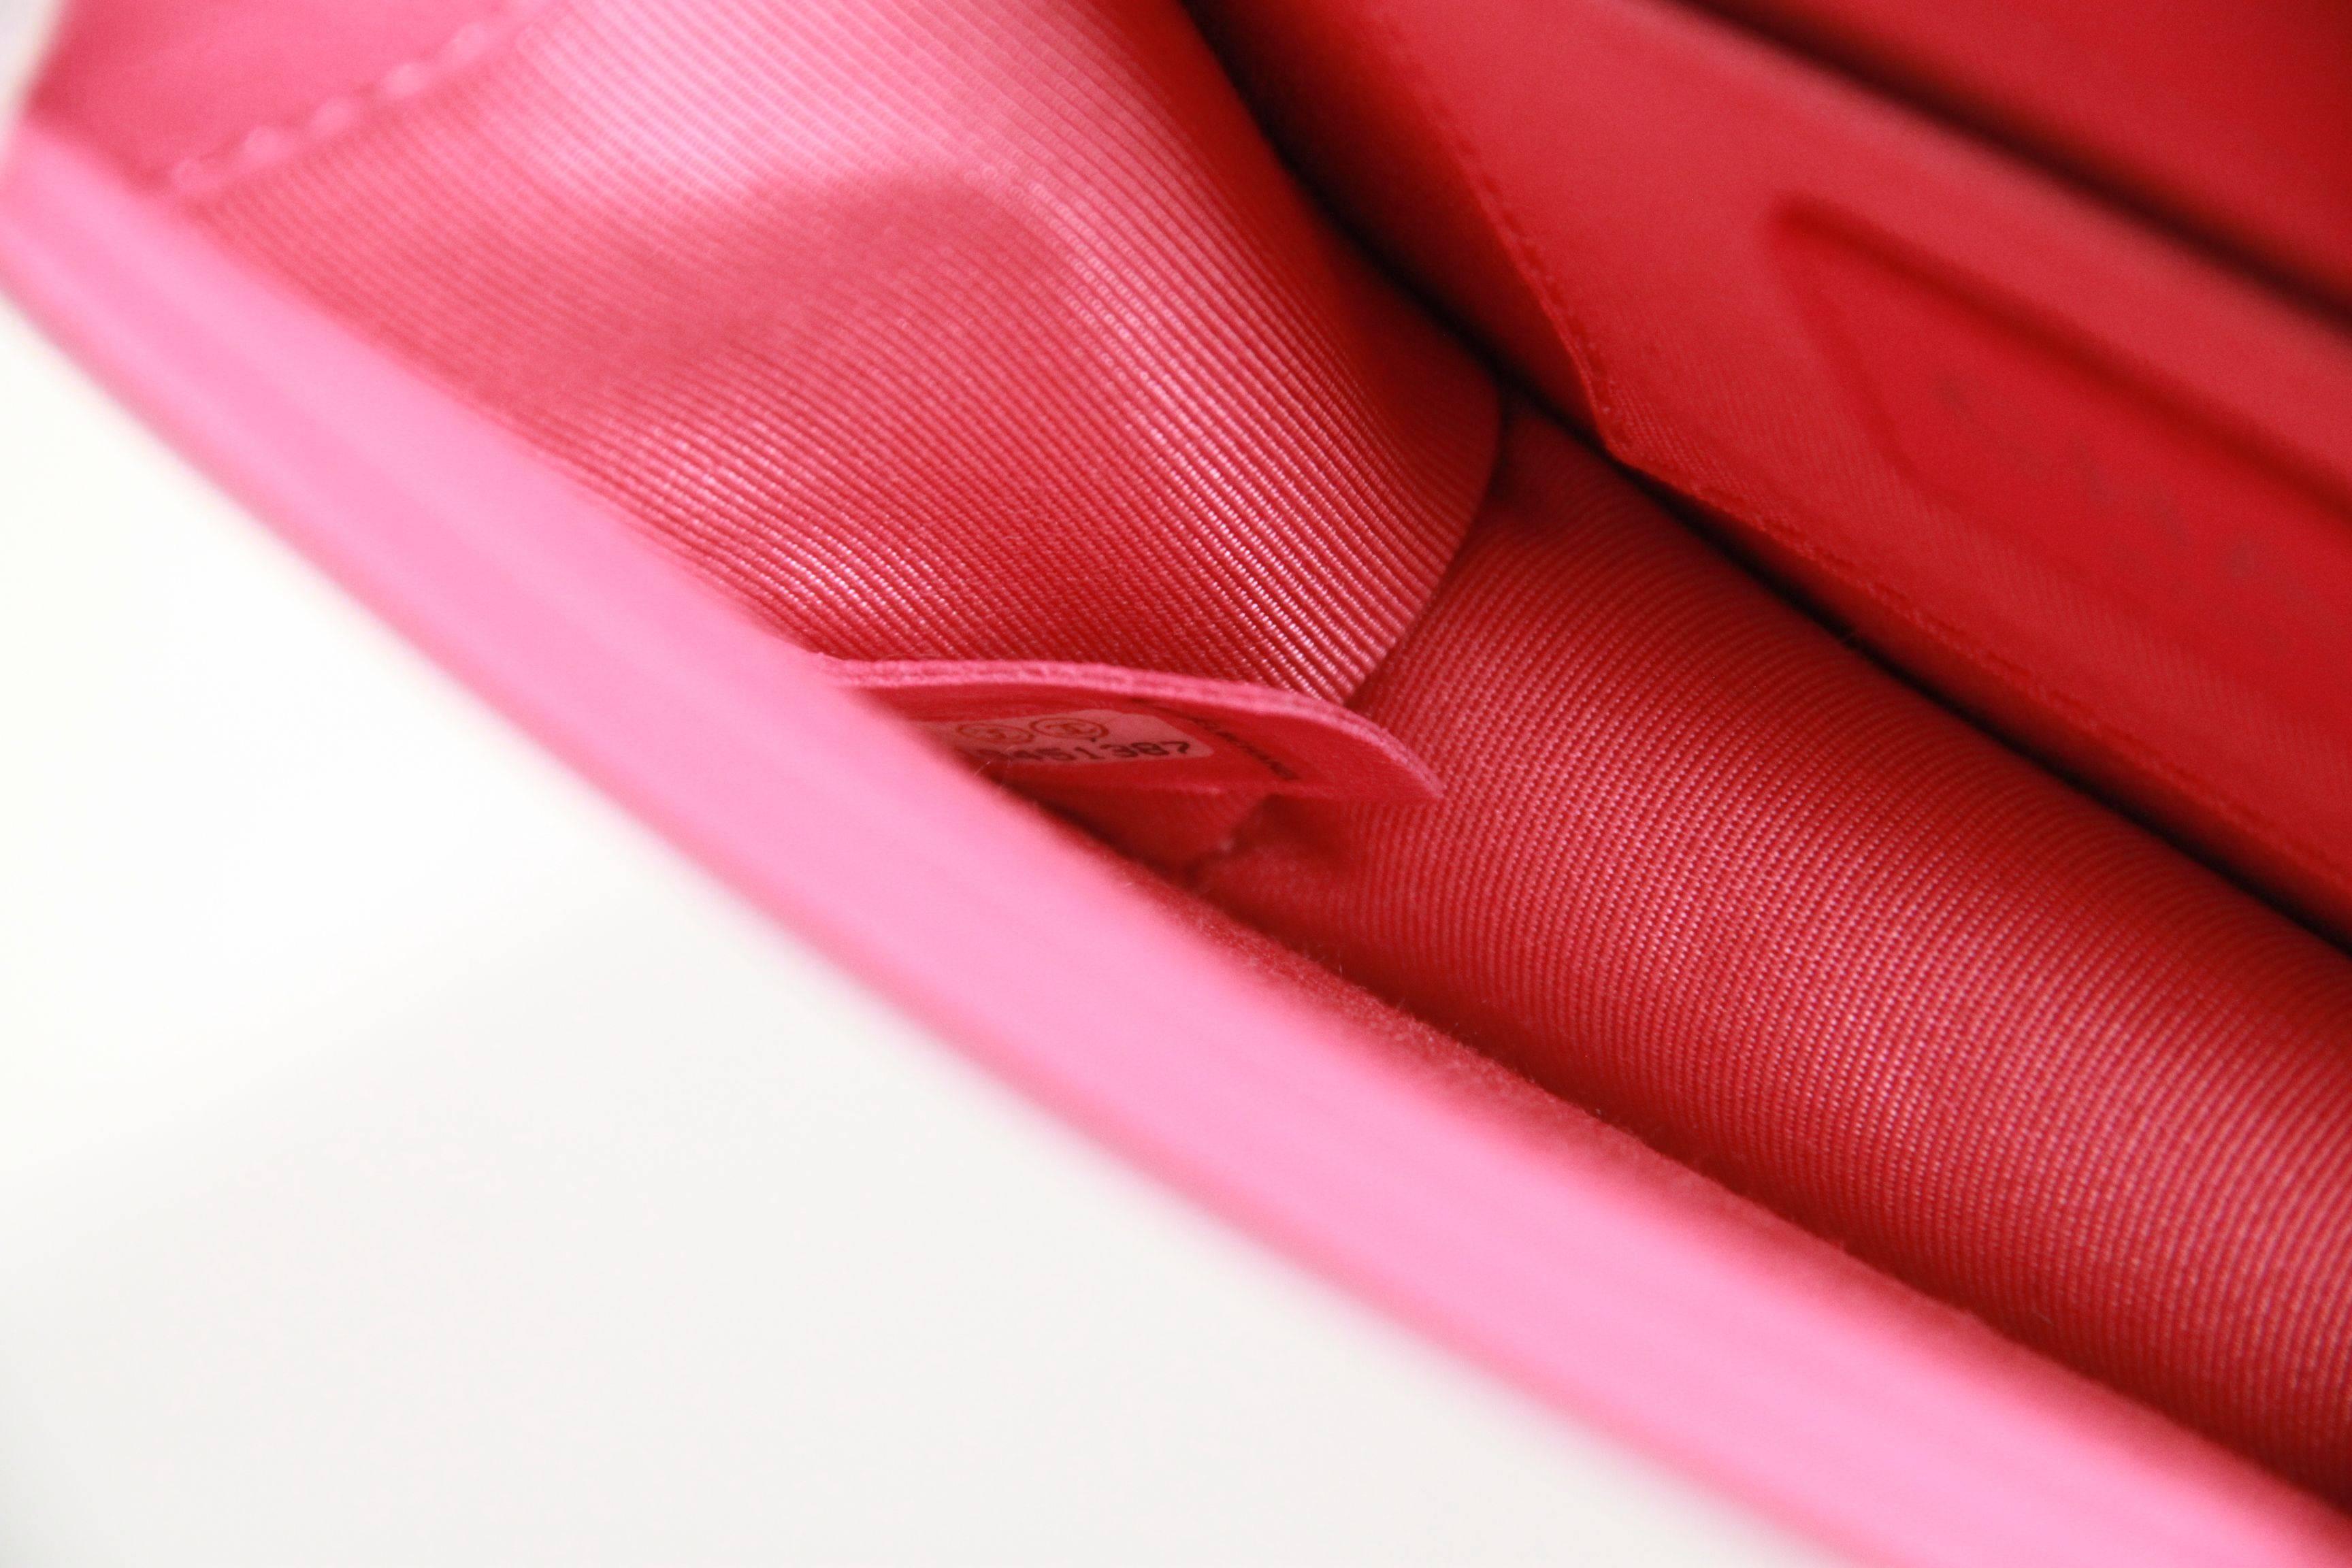 CHANEL Pink Patent Leather OMBRE BLOCK LOGO Mini CROSSBODY BAG Ltd Ed 4